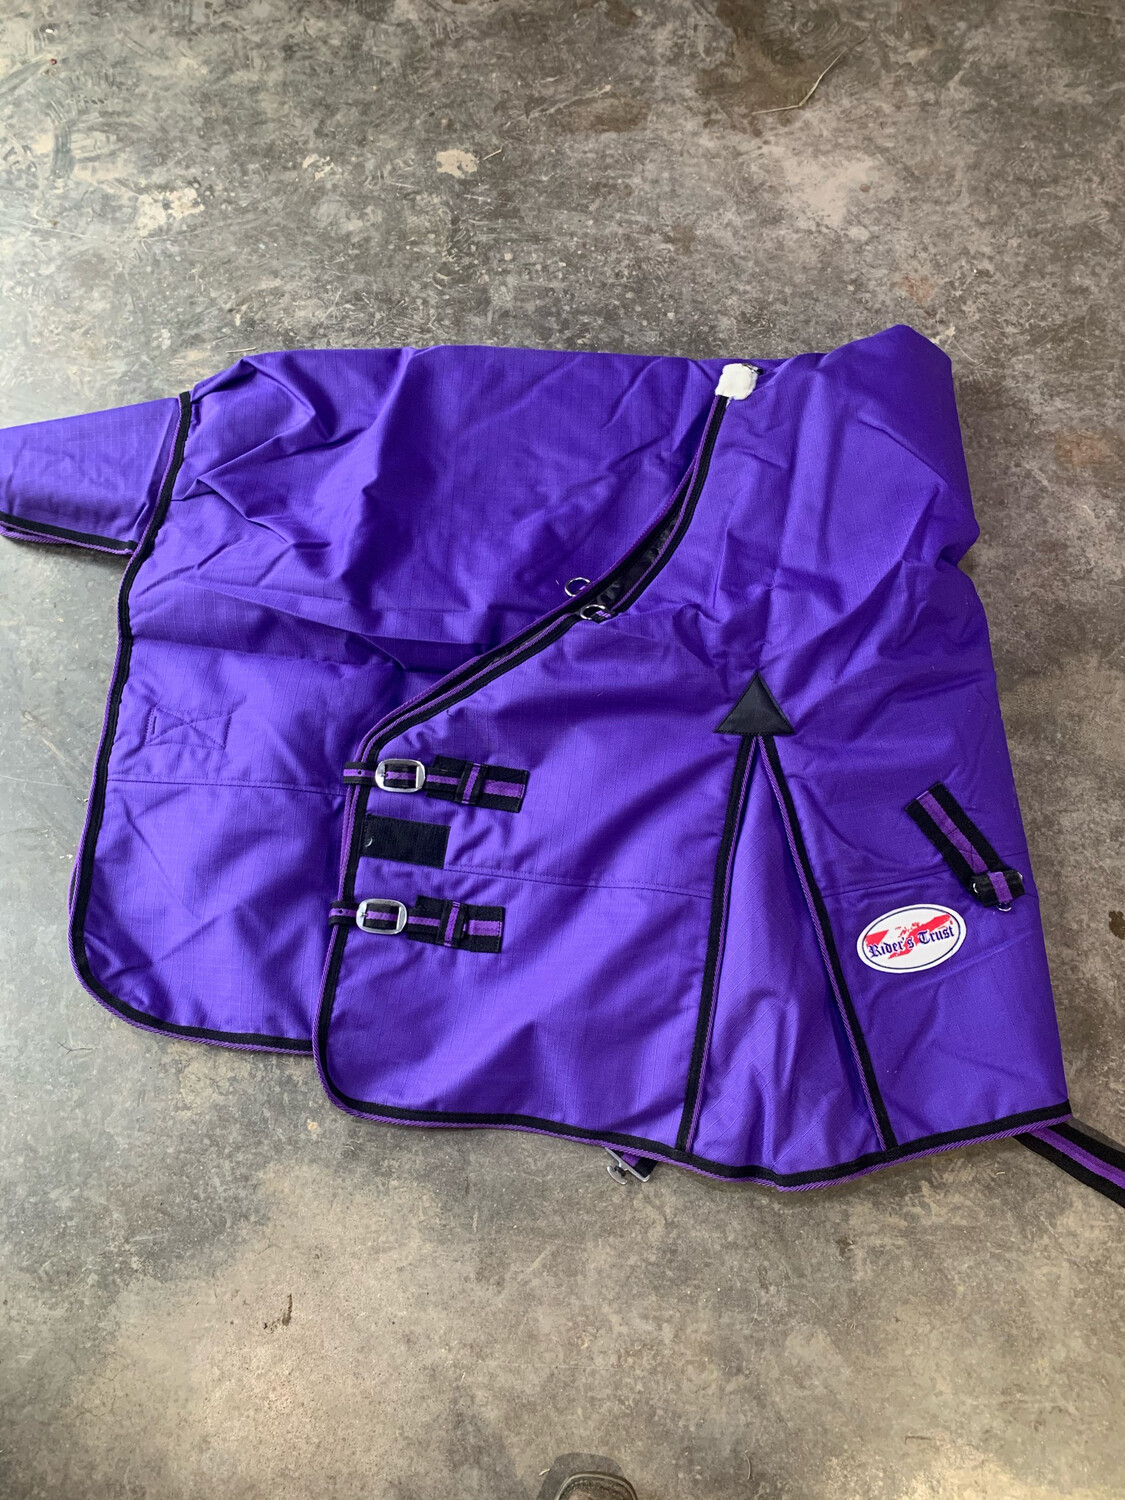 Turnout Blanket 200g- Purple